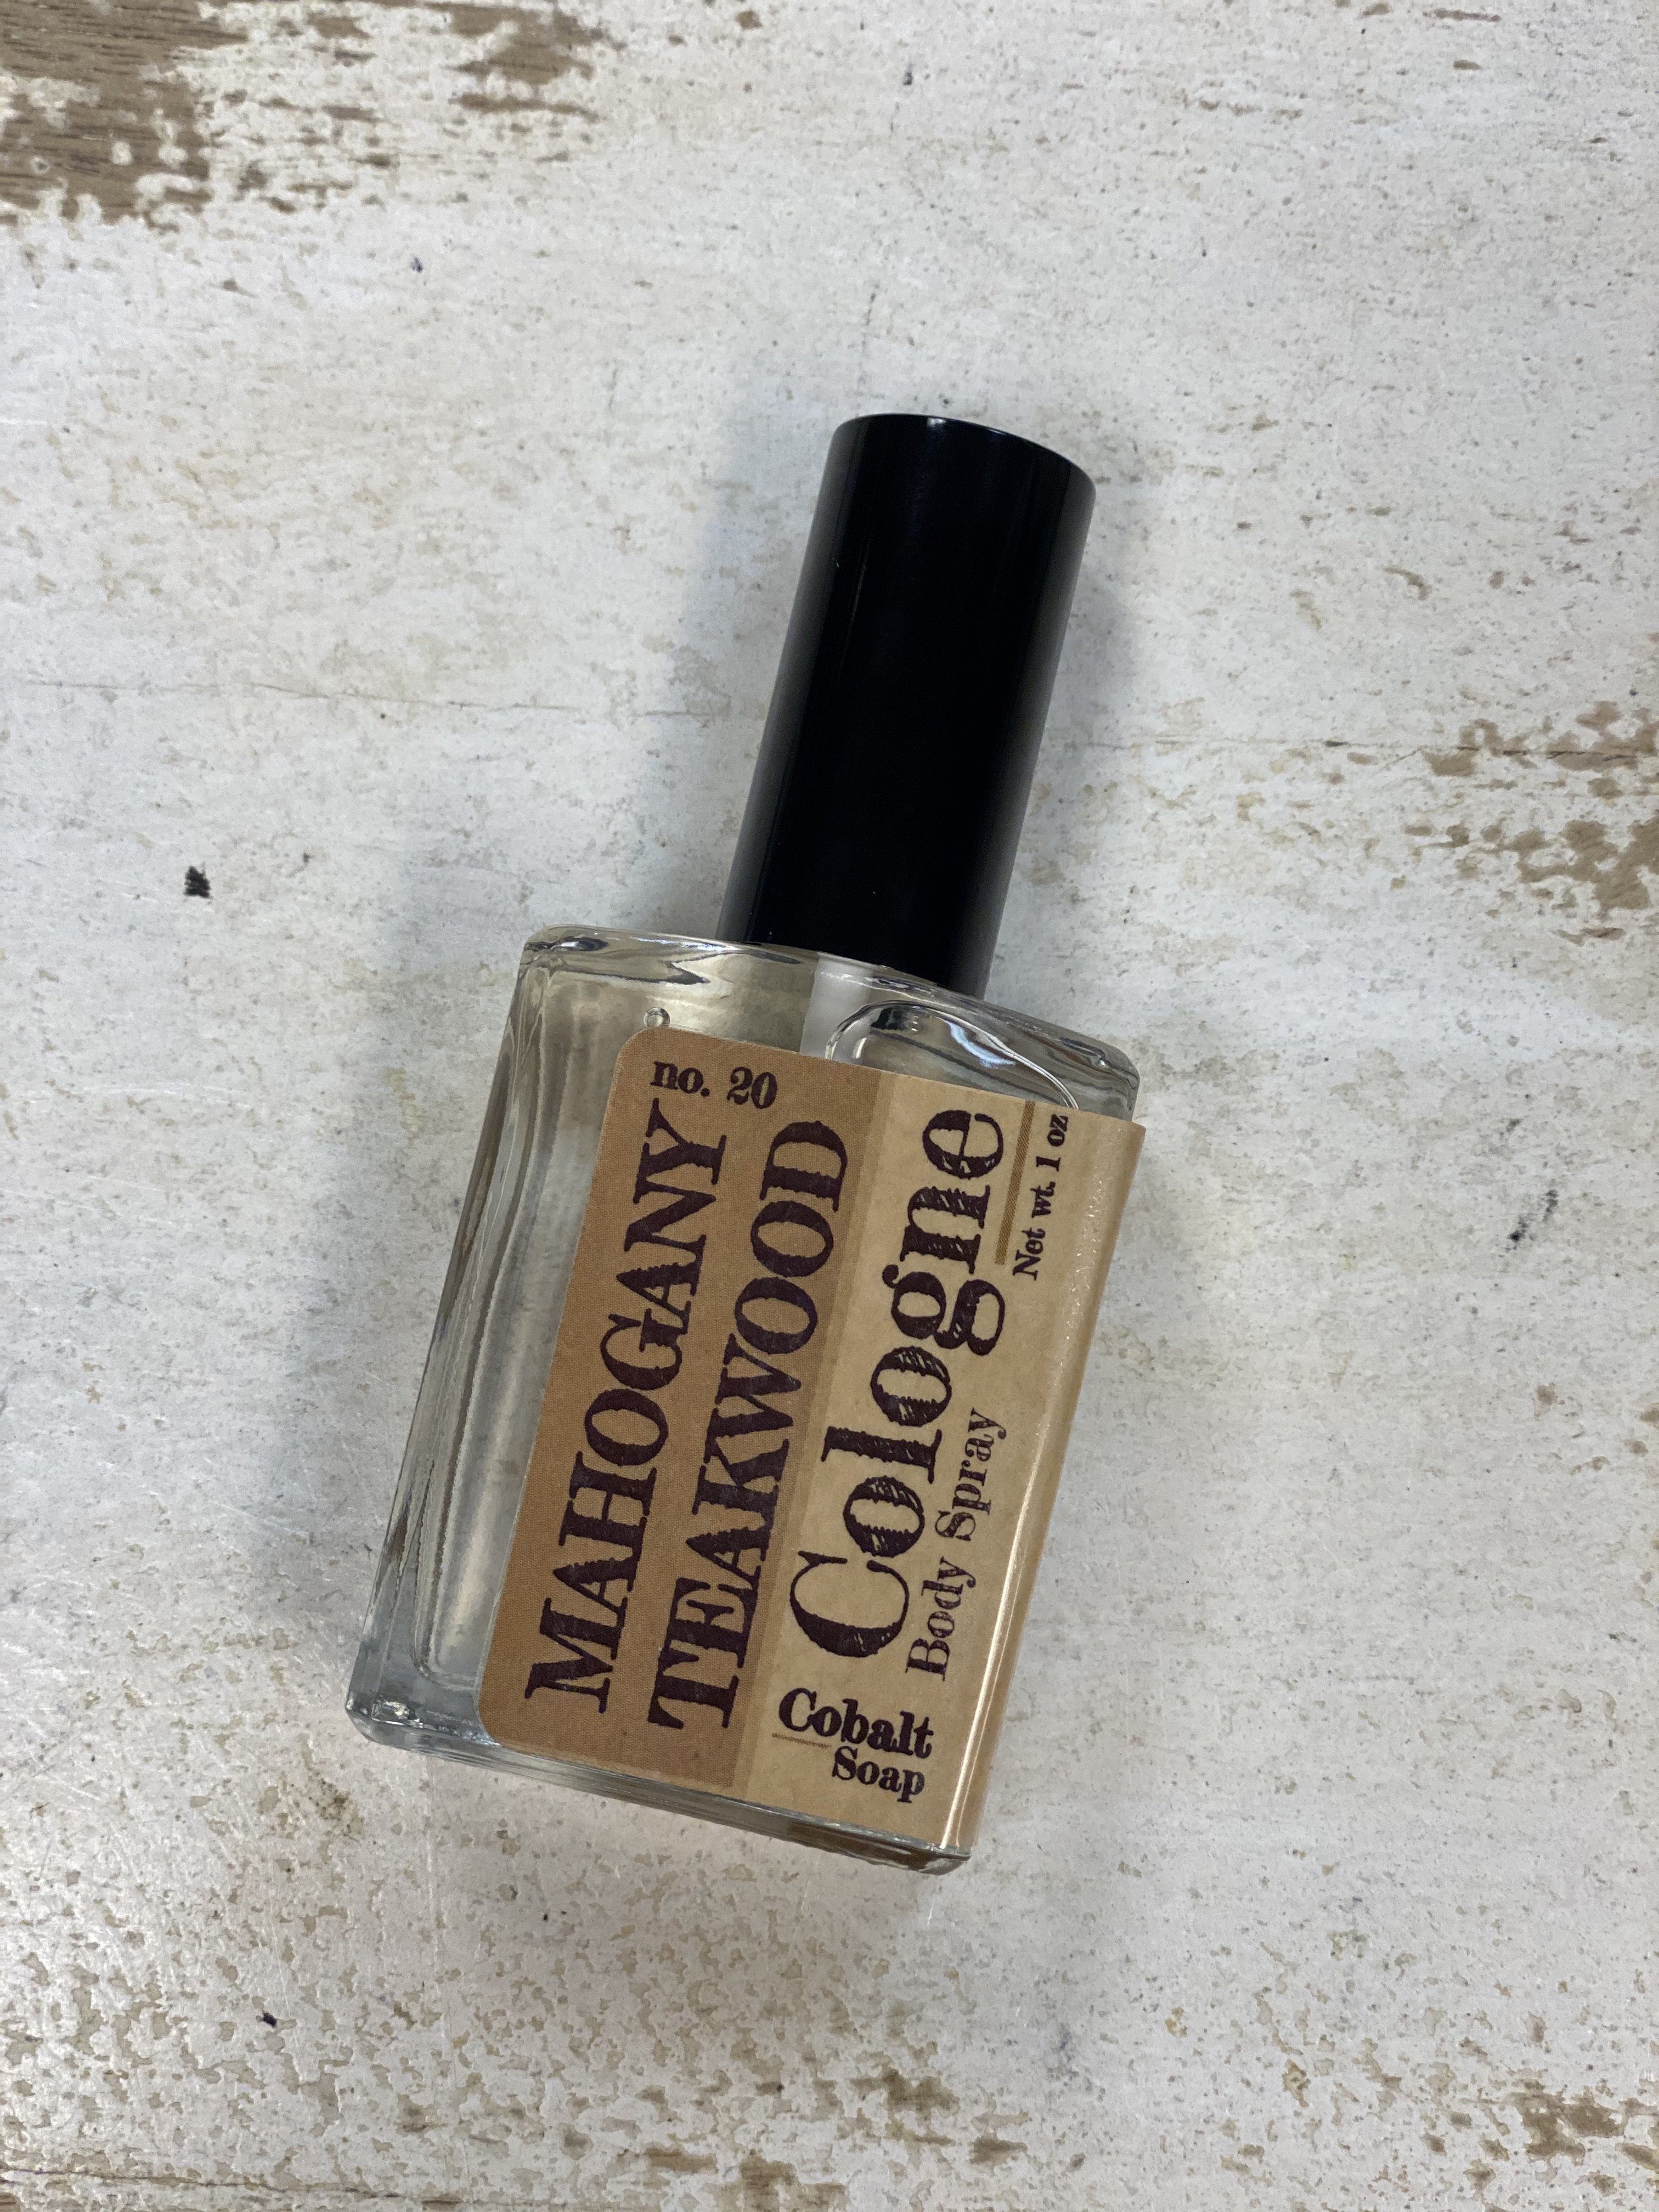 Cobalt Soap Co. Spray Cologne - Mahogany Teakwood